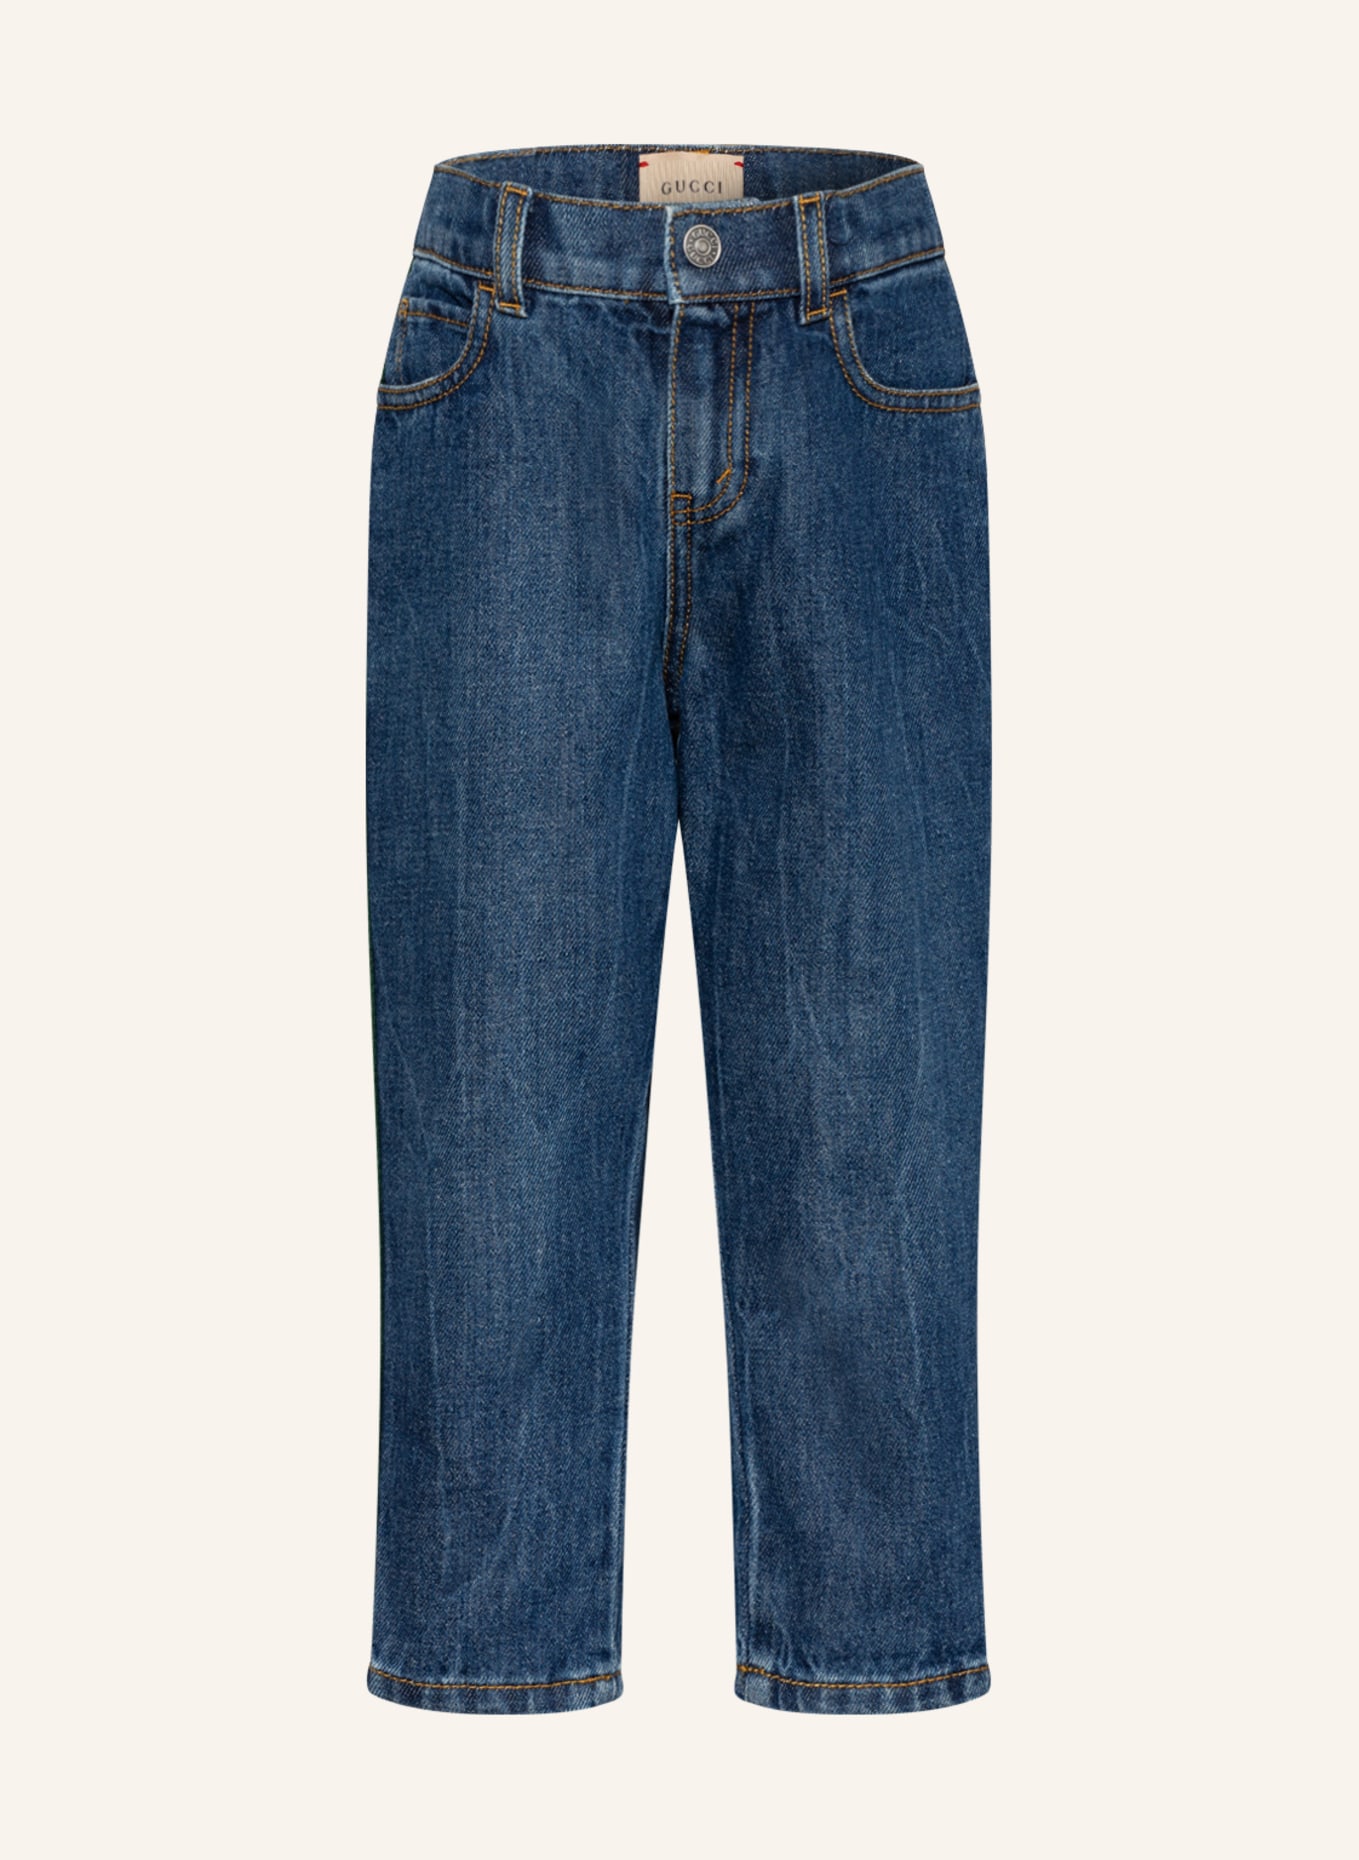 GUCCI Jeans, Farbe: DUNKELBLAU (Bild 1)